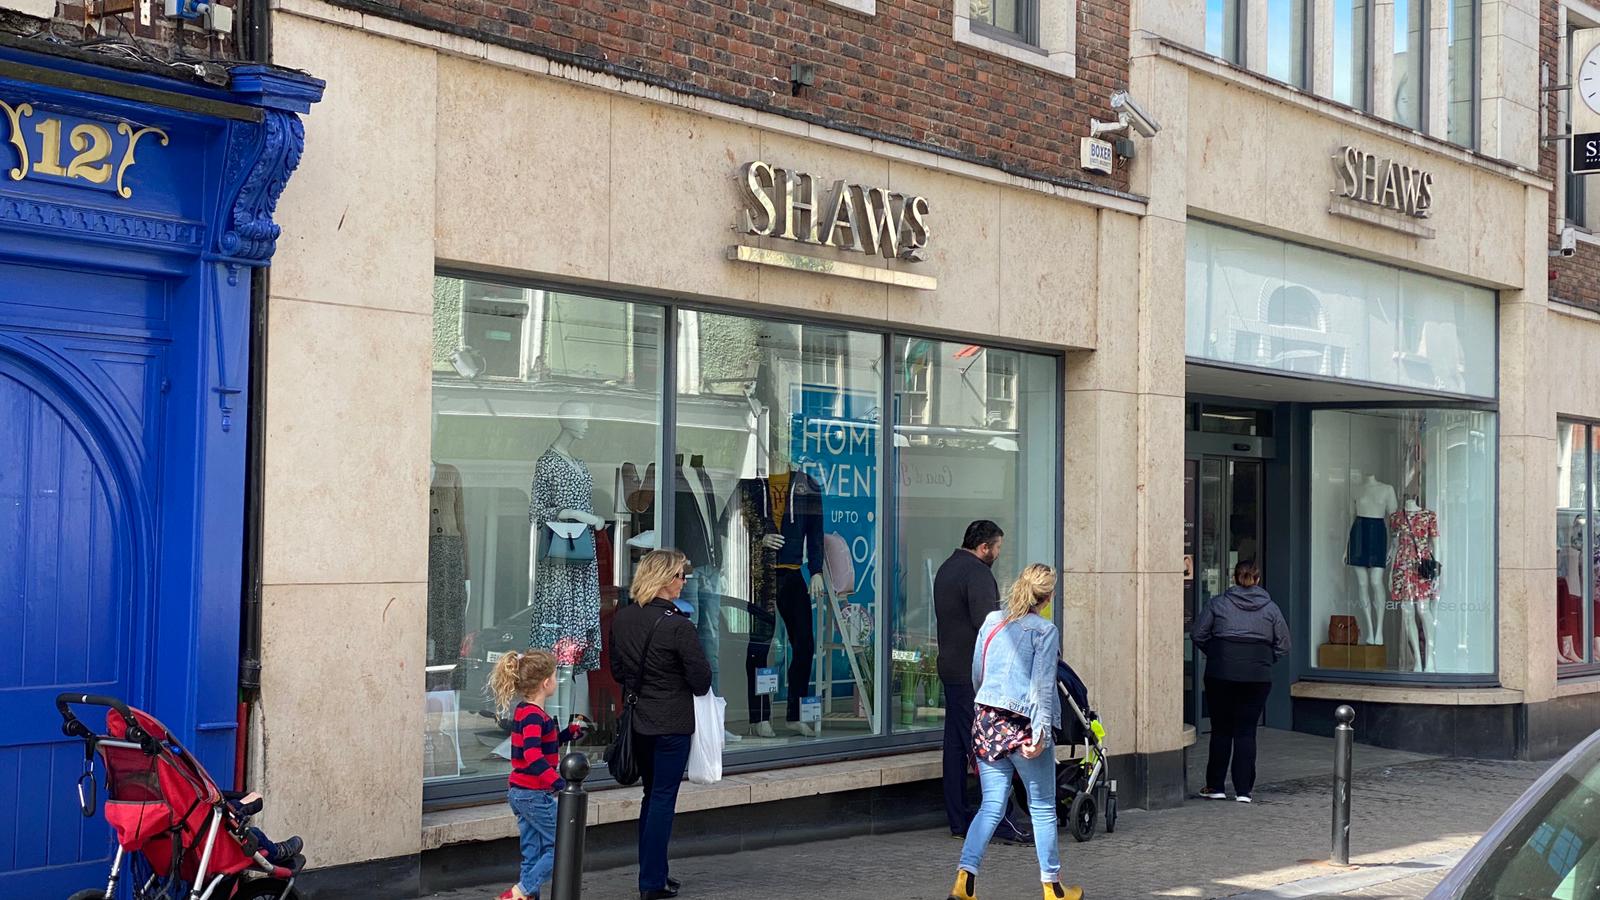 Shaws on Tullow Street in Carlow (Credit: Carlow Weather)